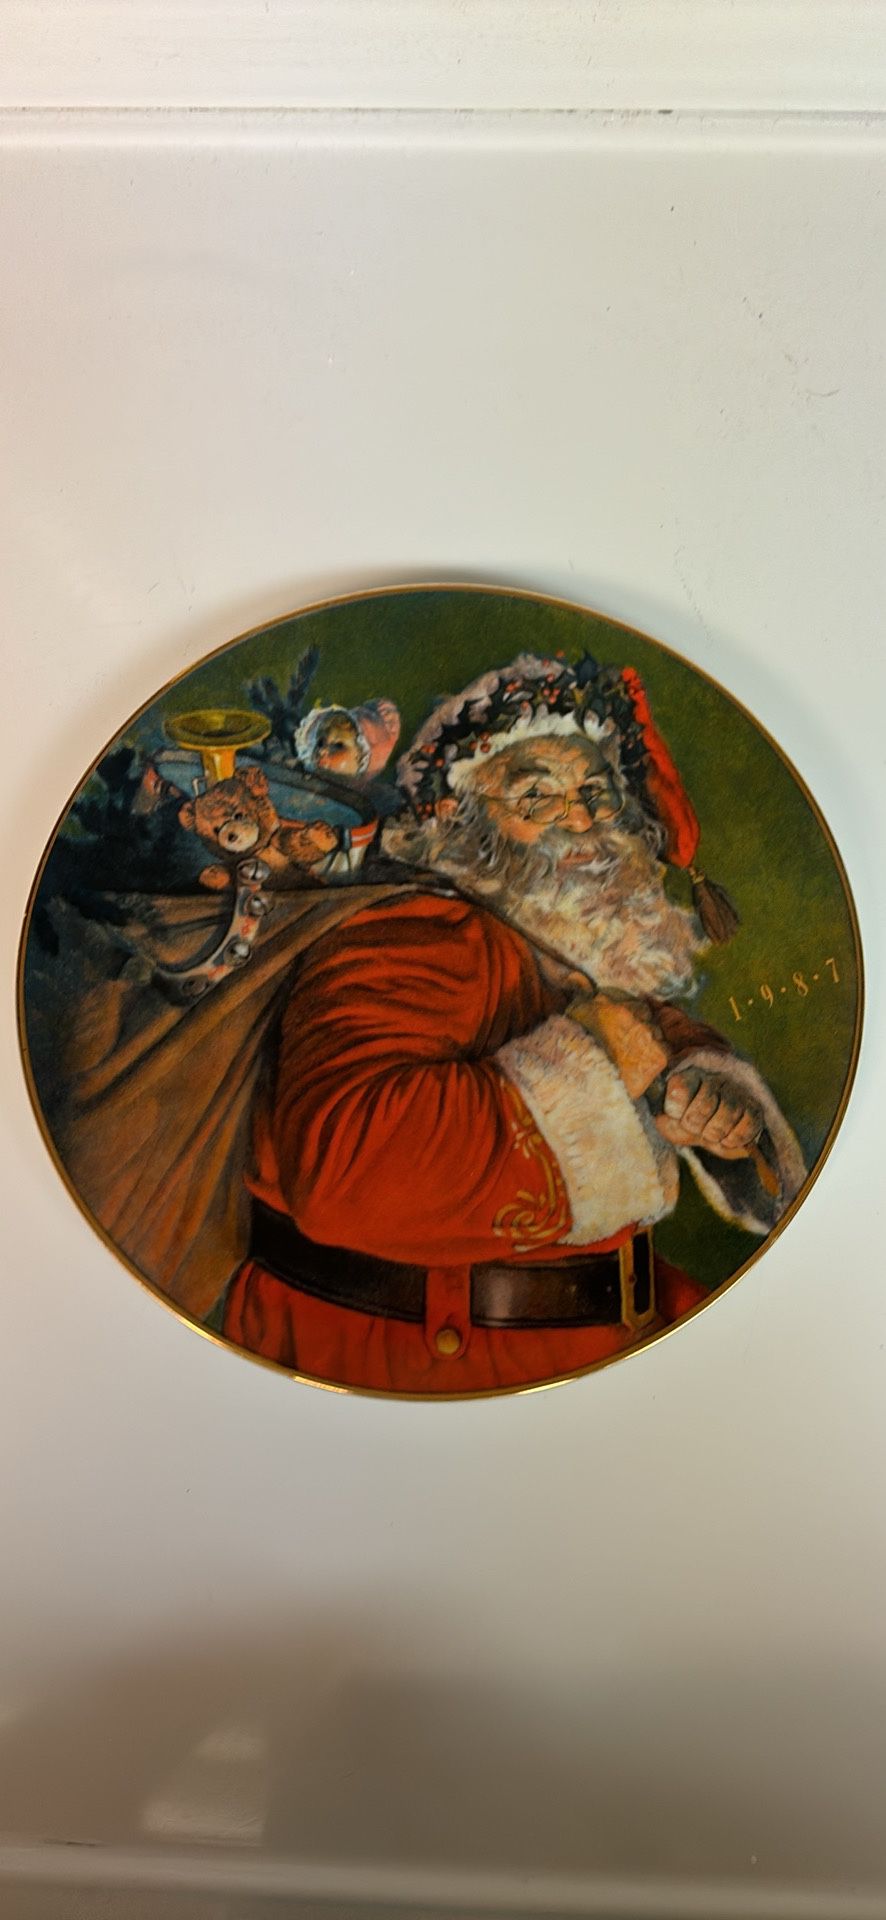 Vintage Christmas 1987 Avon Collector 8” Porcelain Plate  “The Magic That Santa Brings".